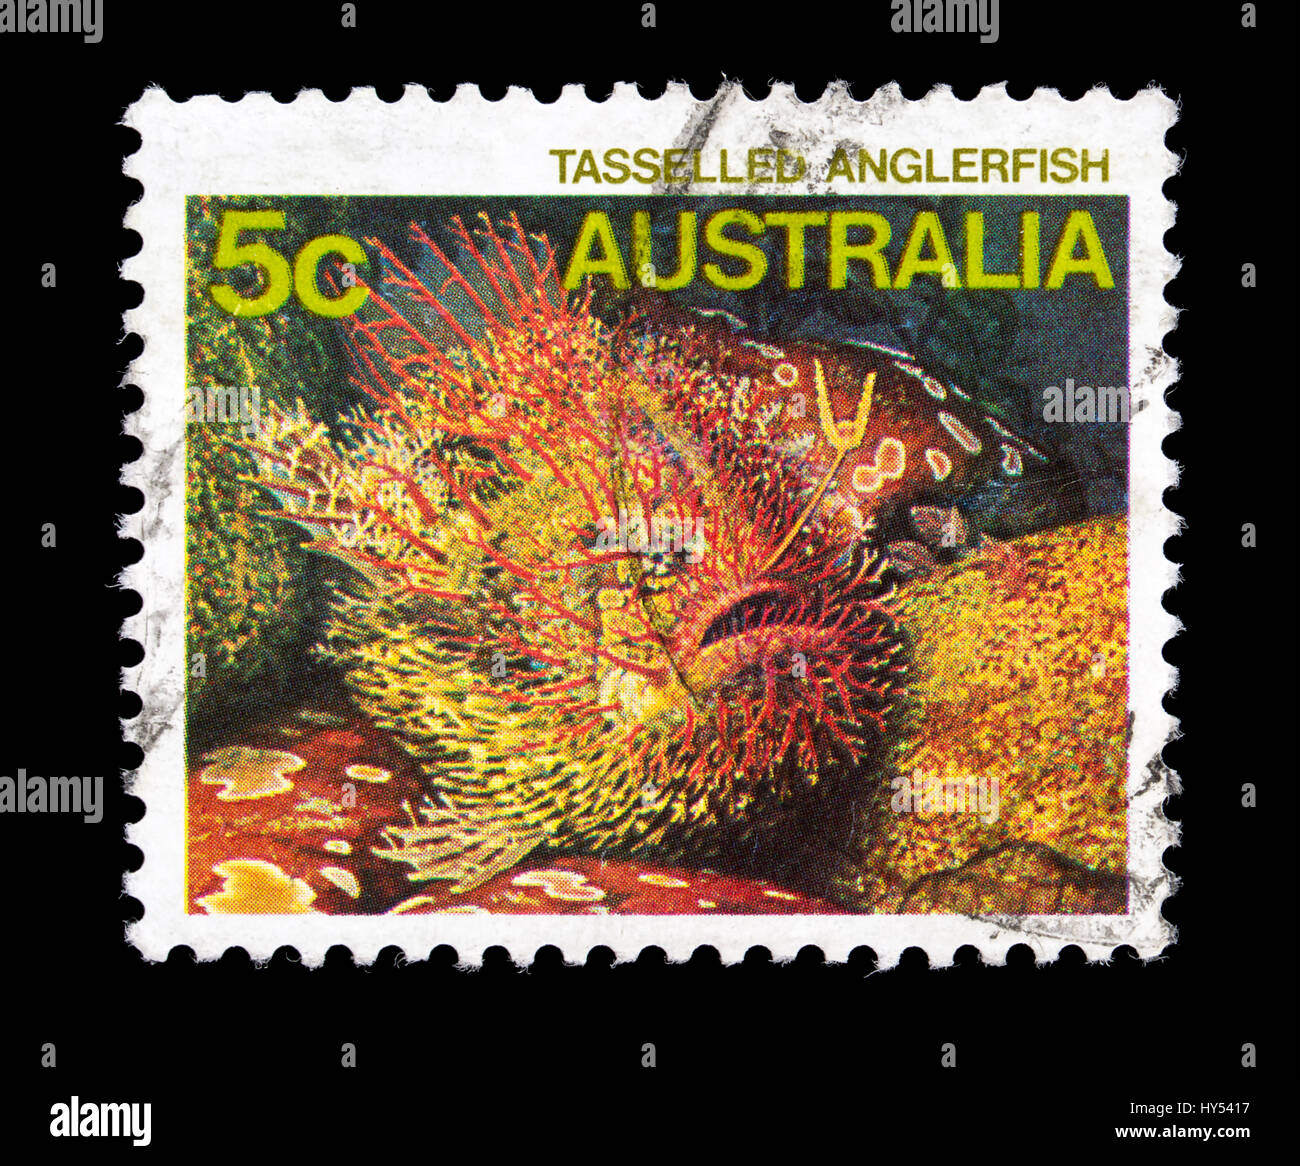 Postage stamp from Australia depicting a tasseled anglerfish (Rhycherus filamentosus) Stock Photo